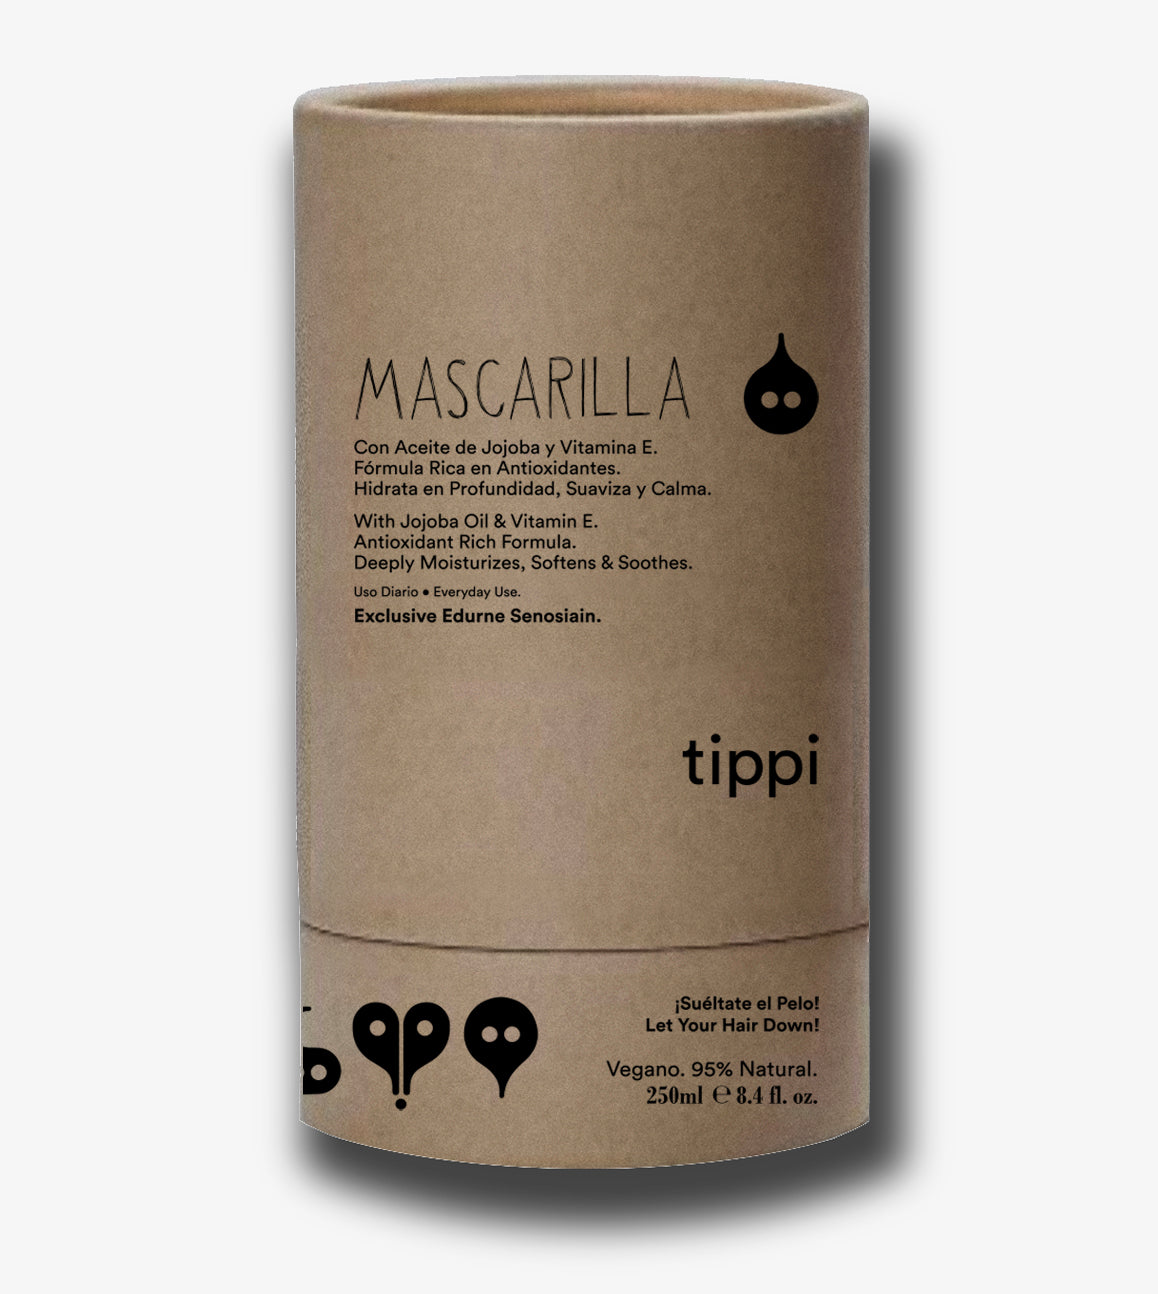 Mascarilla TIPPI by Edurne Senosiain 100ML